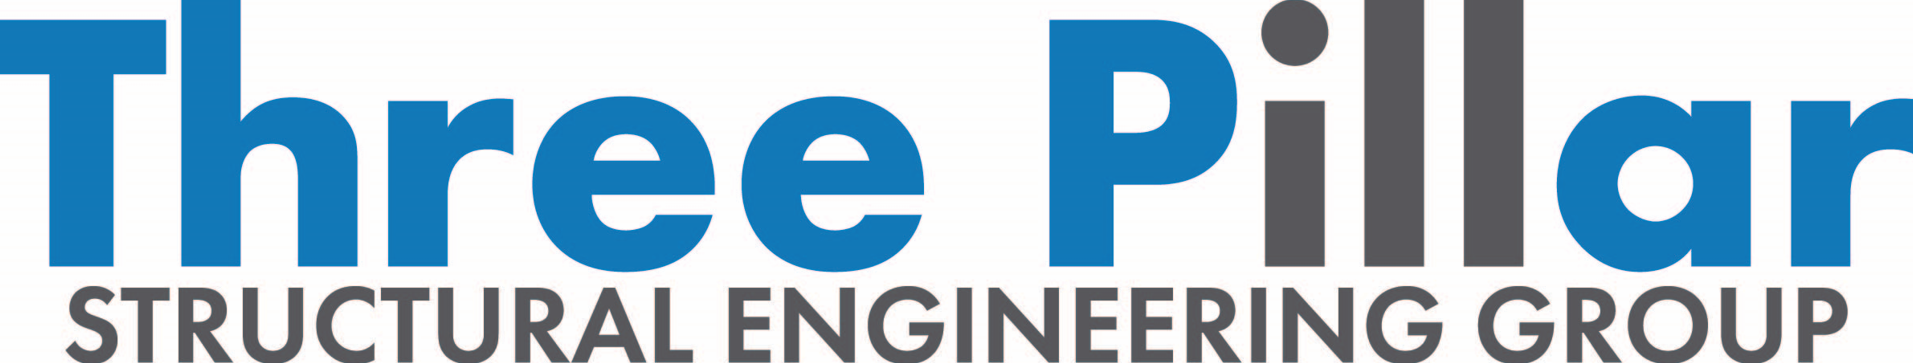 Three Pillar Structural Engineering Group Logo